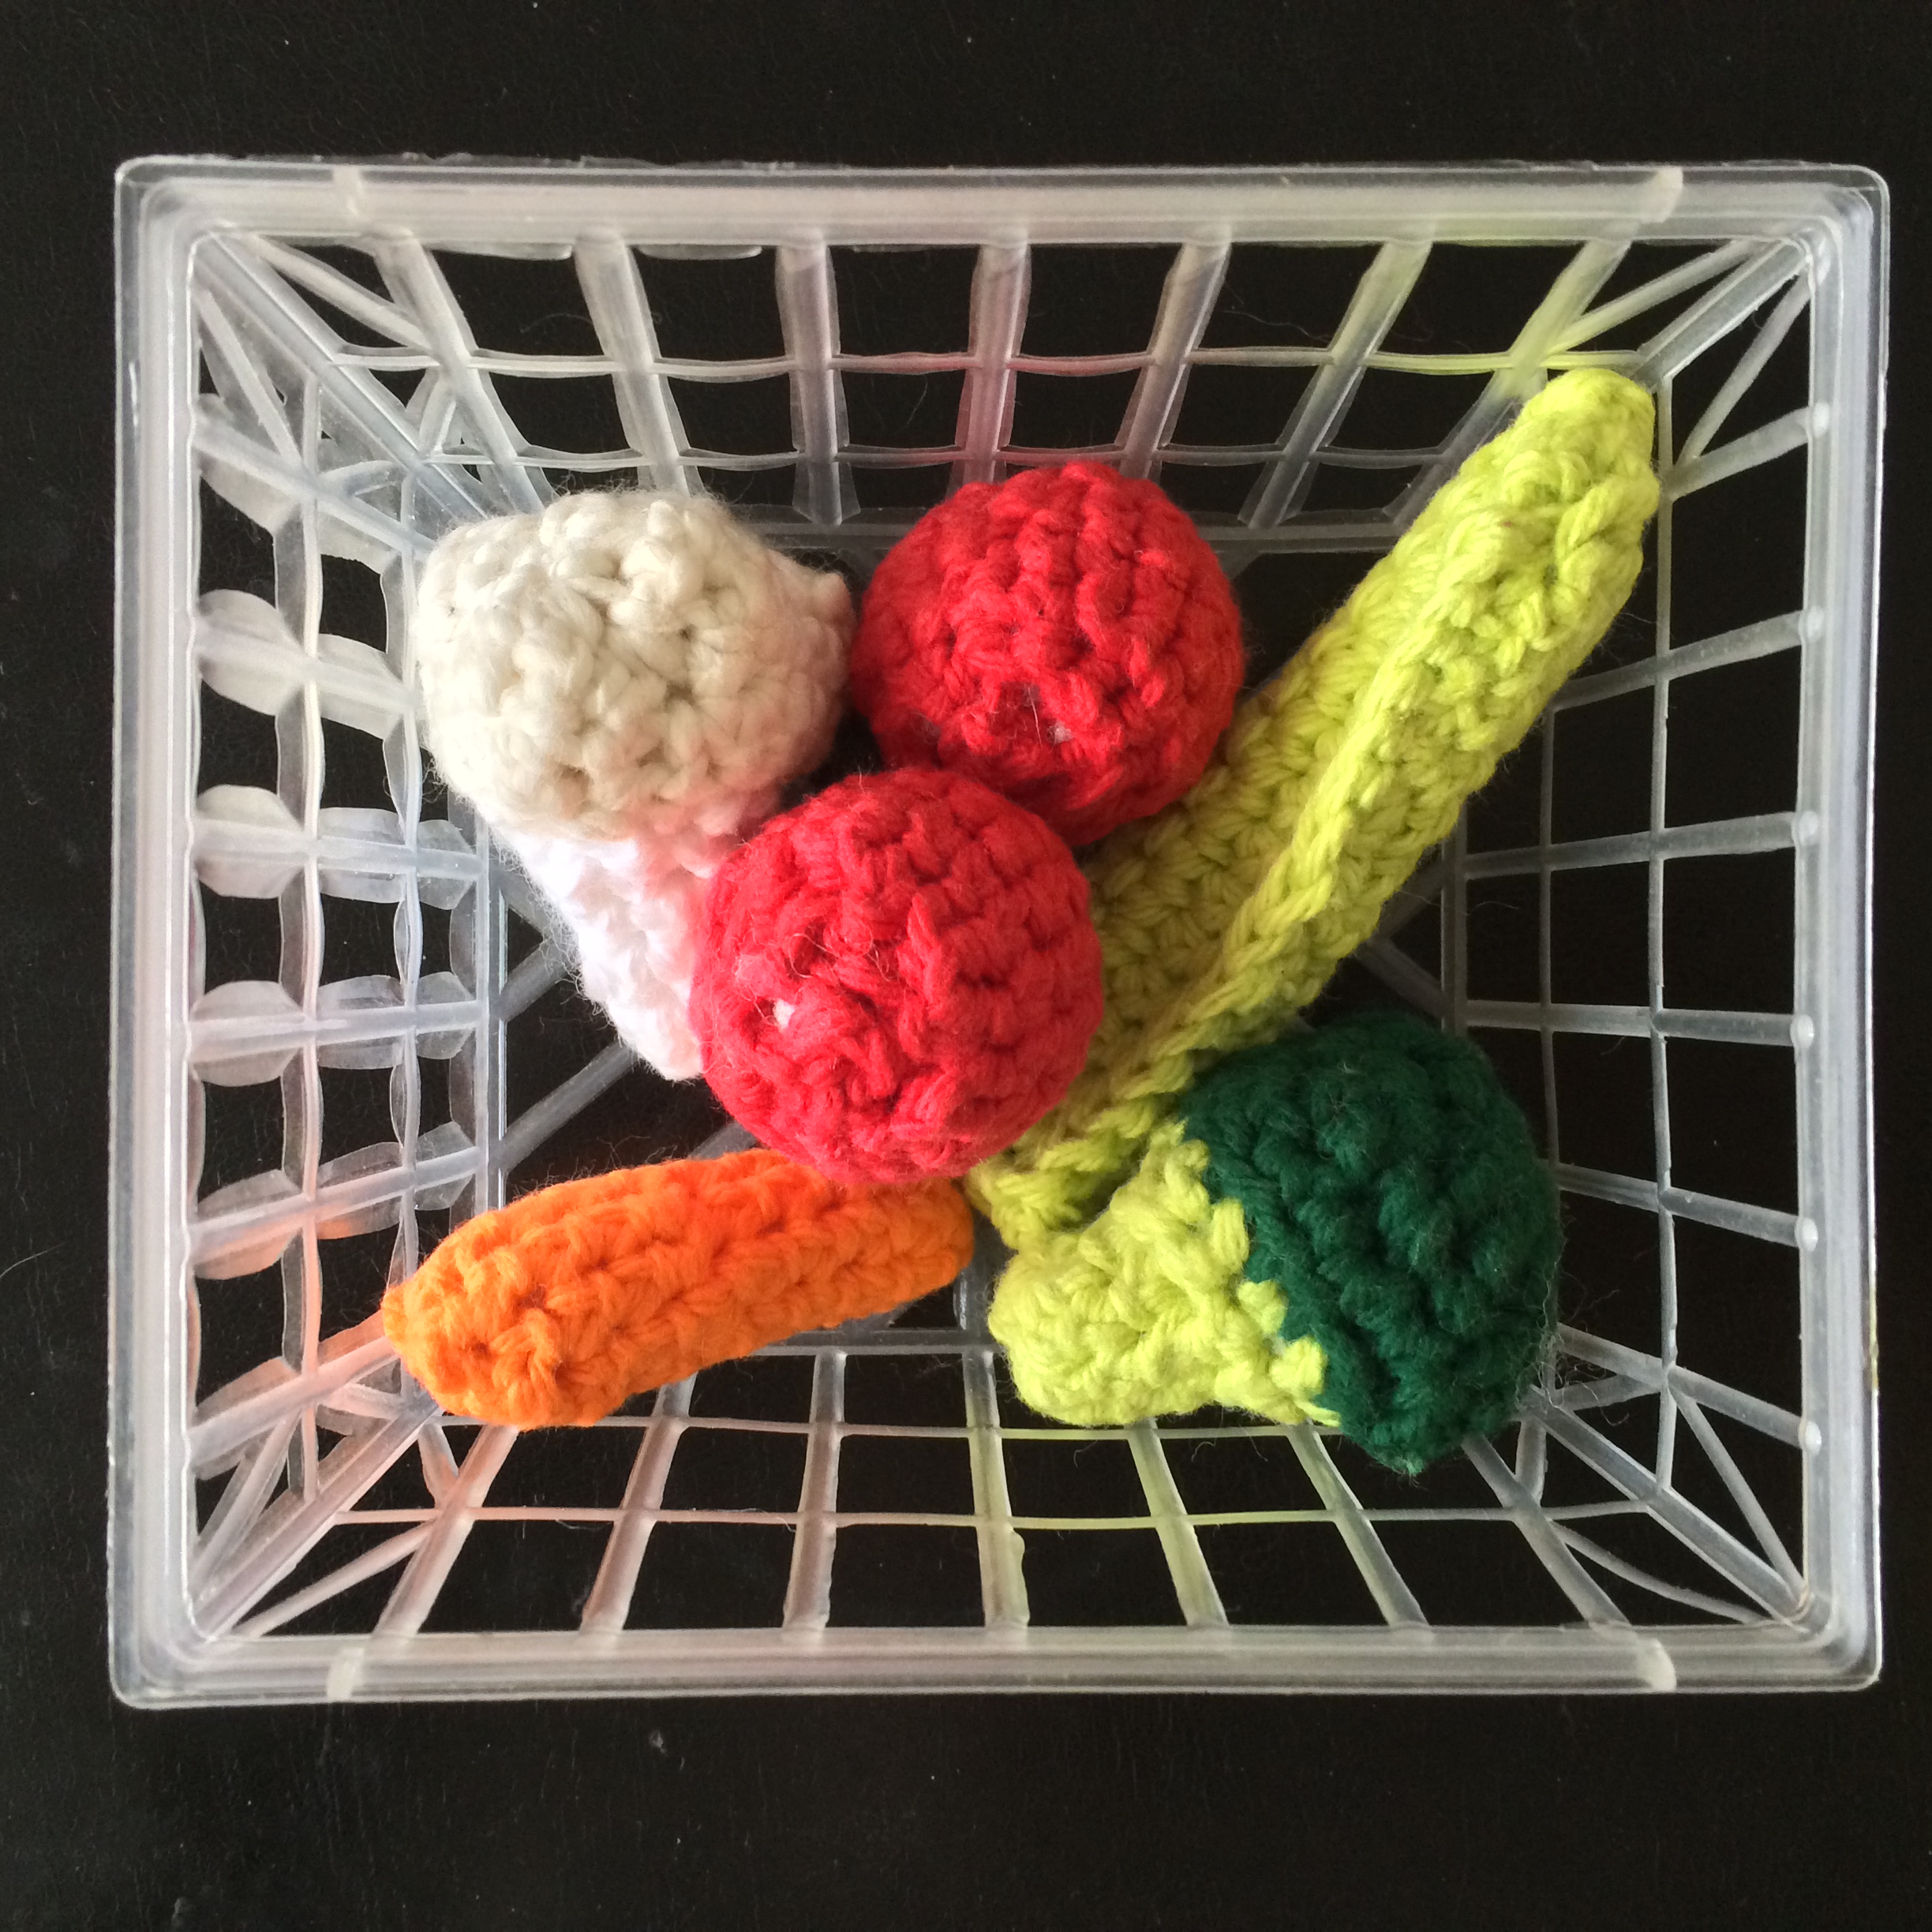 Crocheted Fruits & Vegetables - LoMaNa